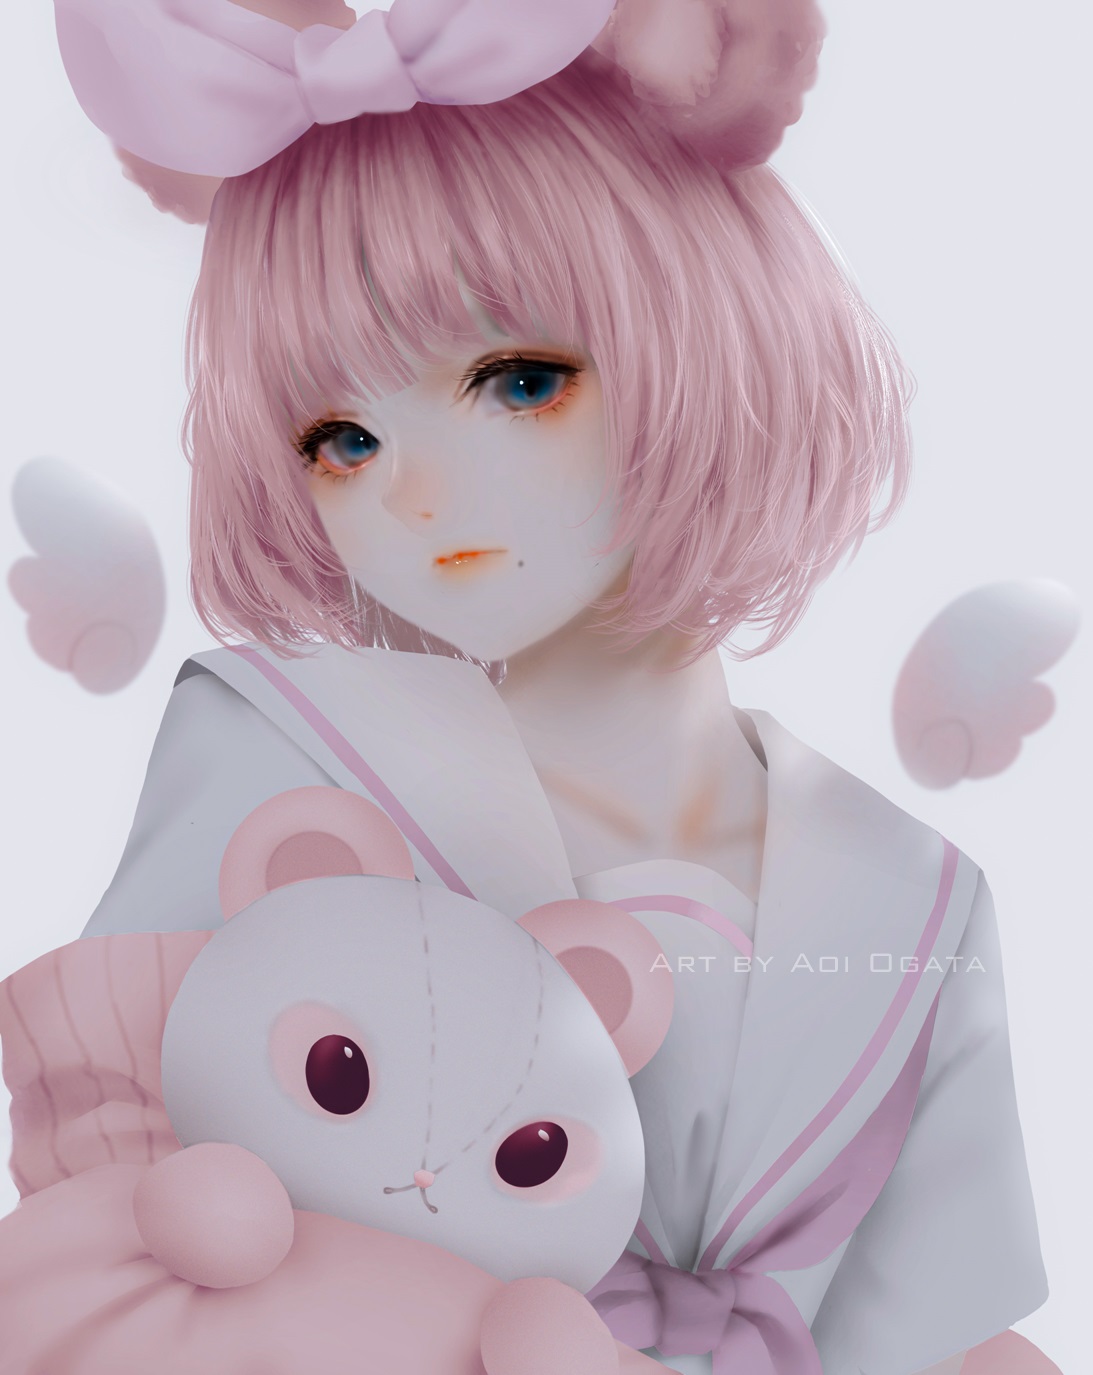 Aoi Ogata 2D Anime Girls Vertical Teddy Bears Pink Hair Blue Eyes 1093x1375